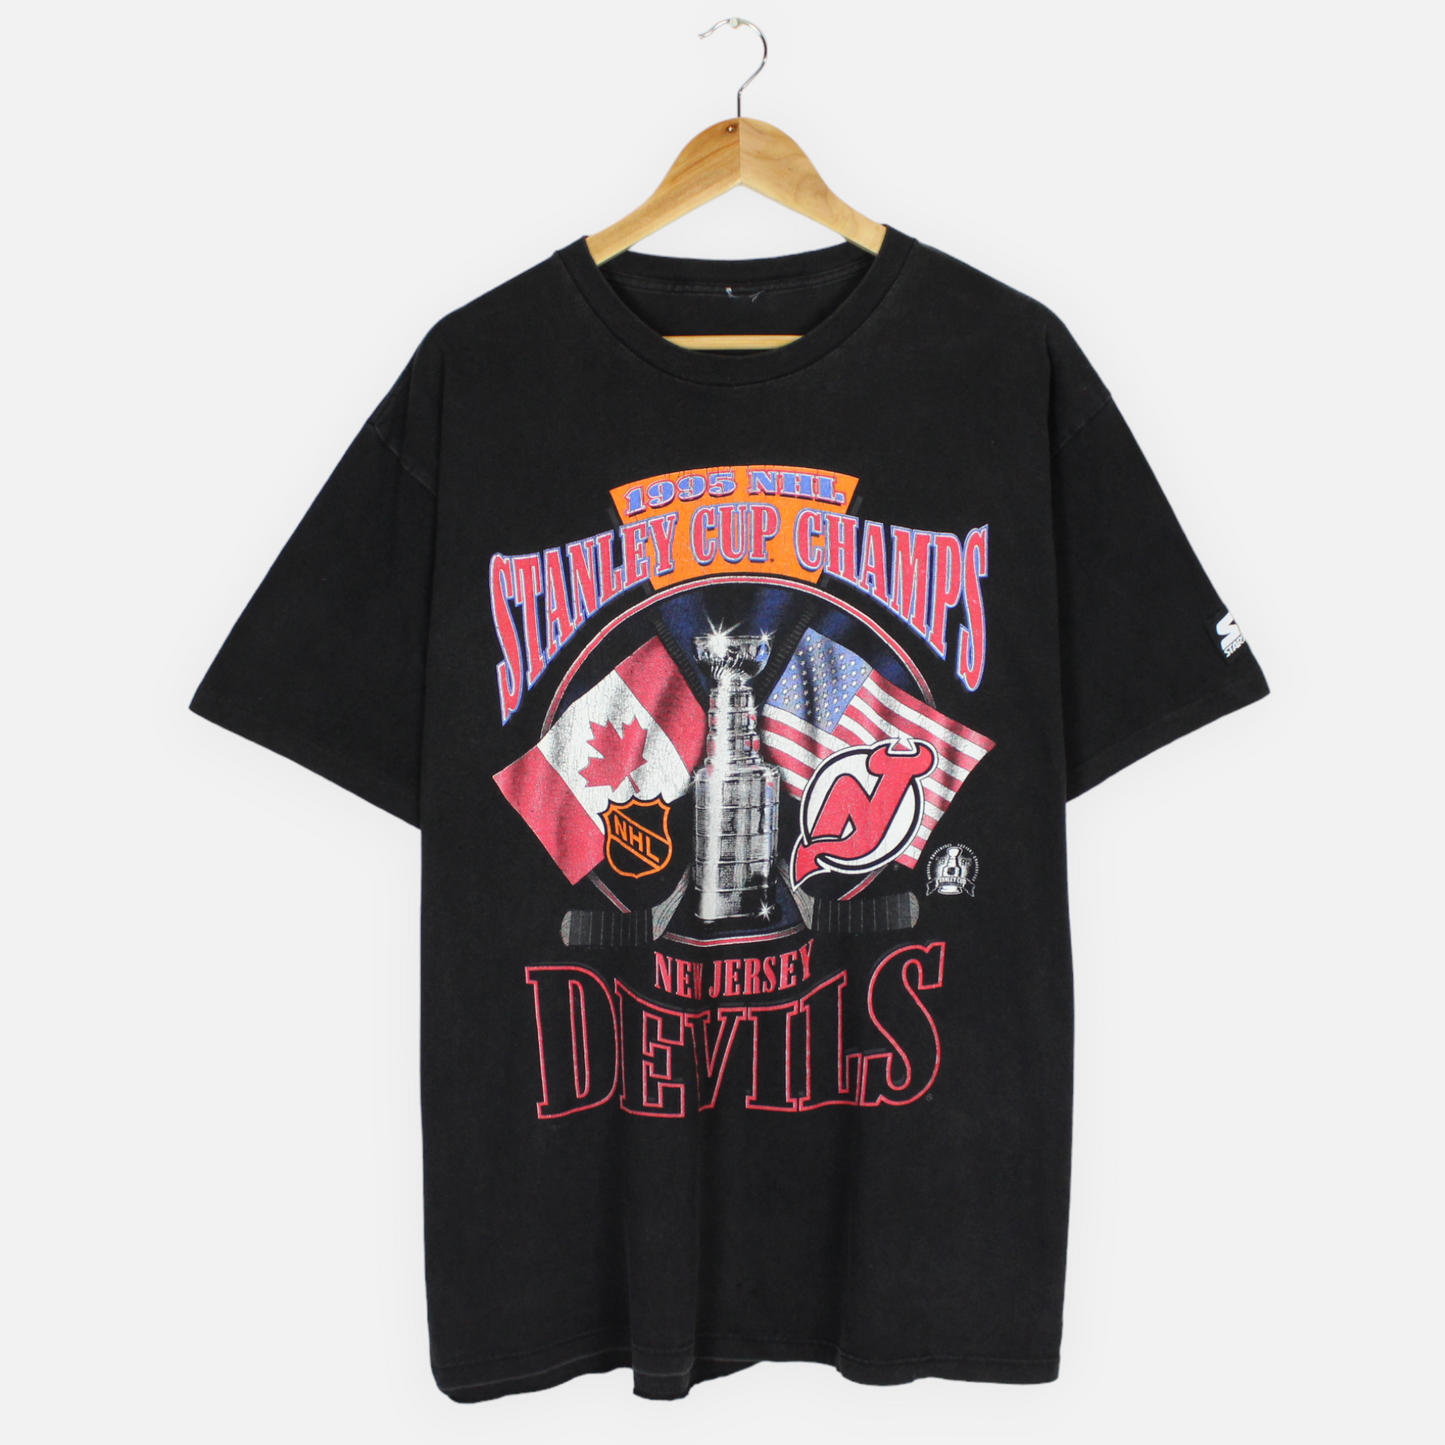 Vintage 1995 New Jersey Devils NHL Tee - XL